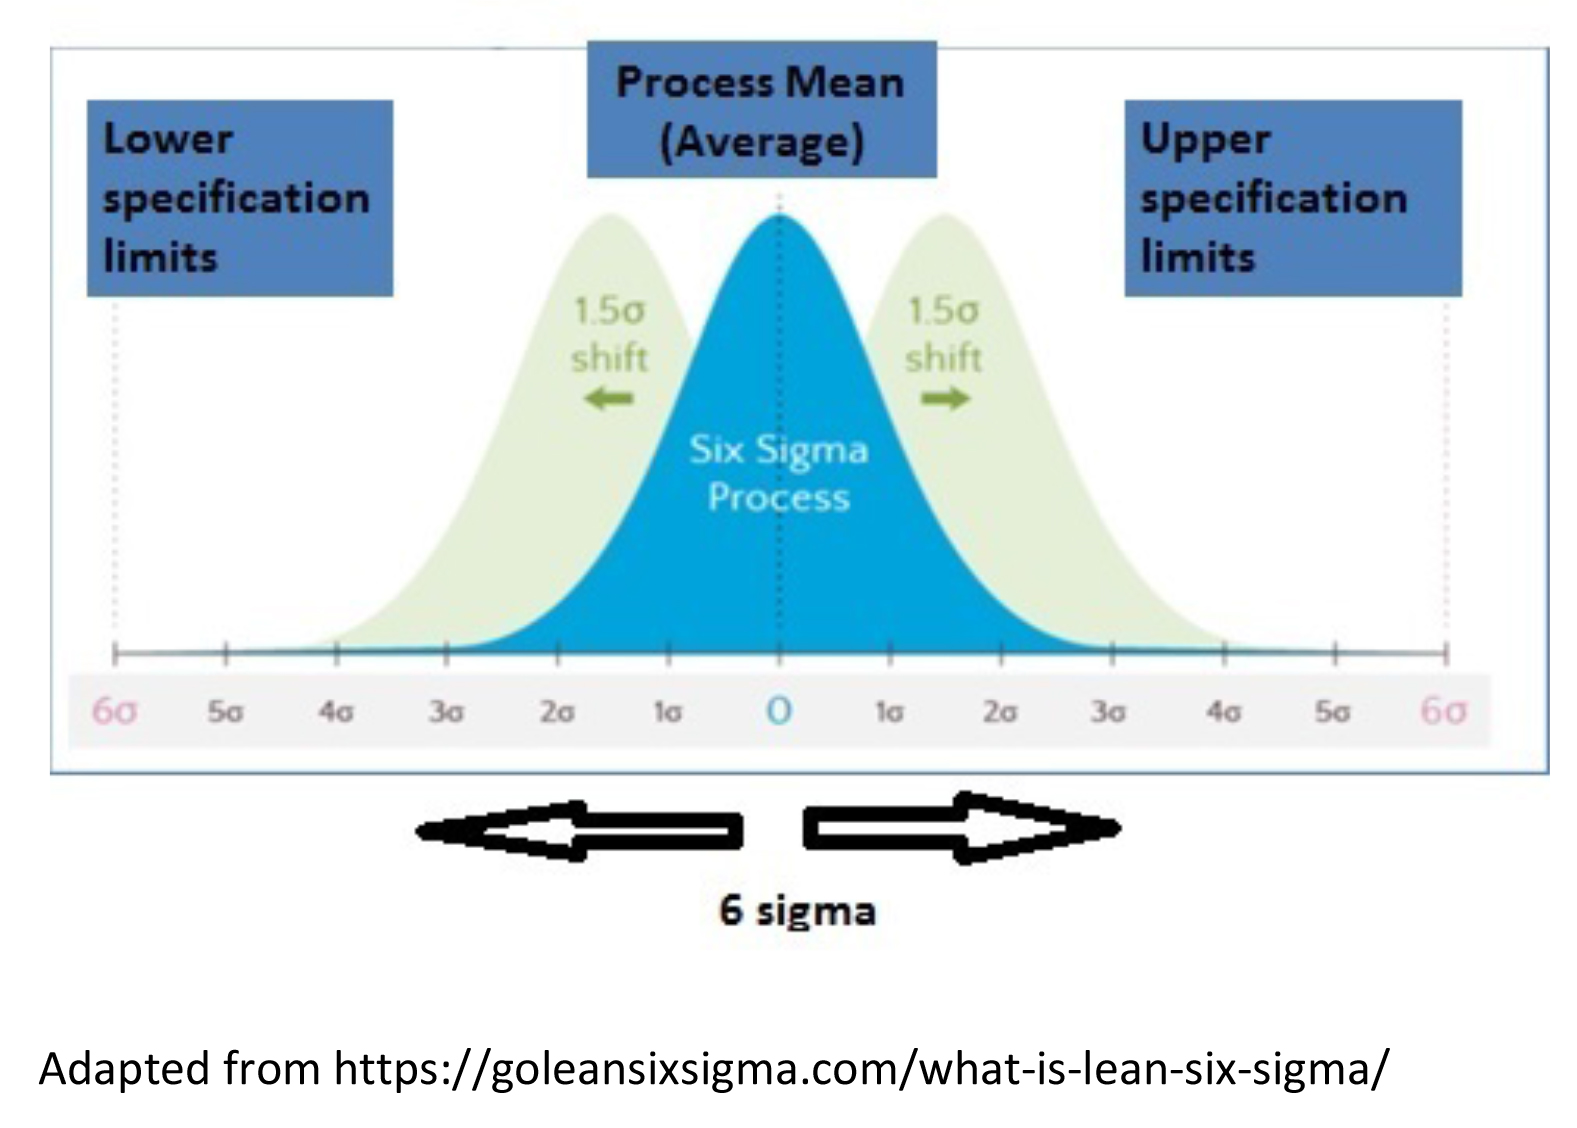 6 sigma methodology